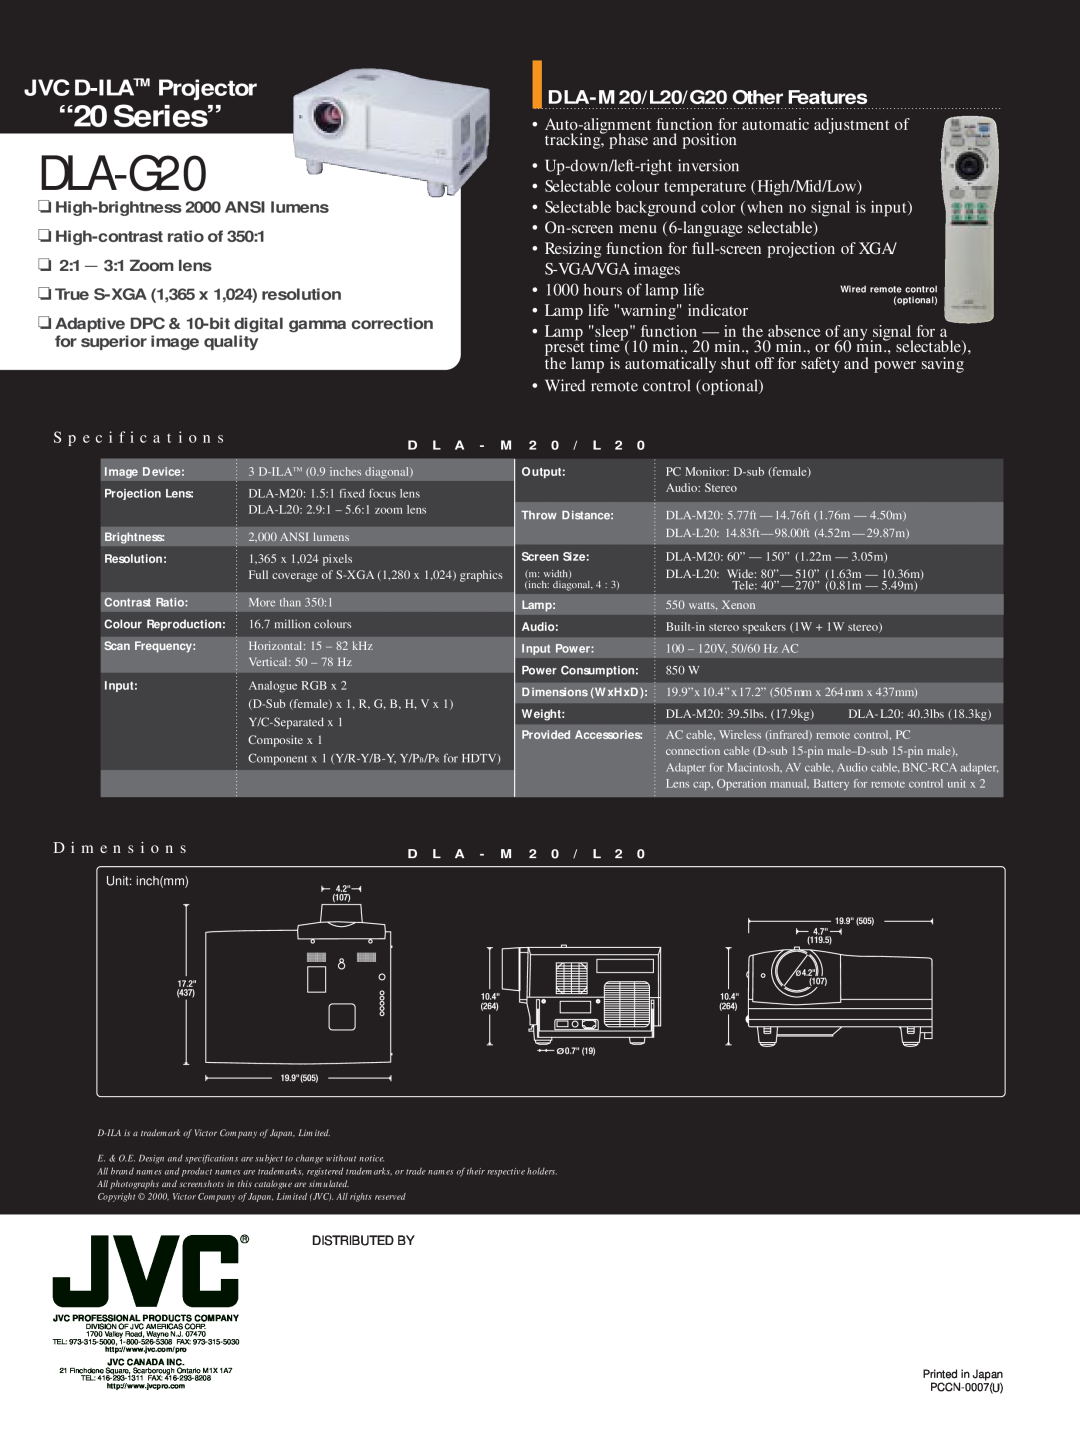 JVC DLA-L20 High-brightness 2000 ANSI lumens High-contrast ratio of, 21 - 31 Zoom lens True S-XGA 1,365 x 1,024 resolution 